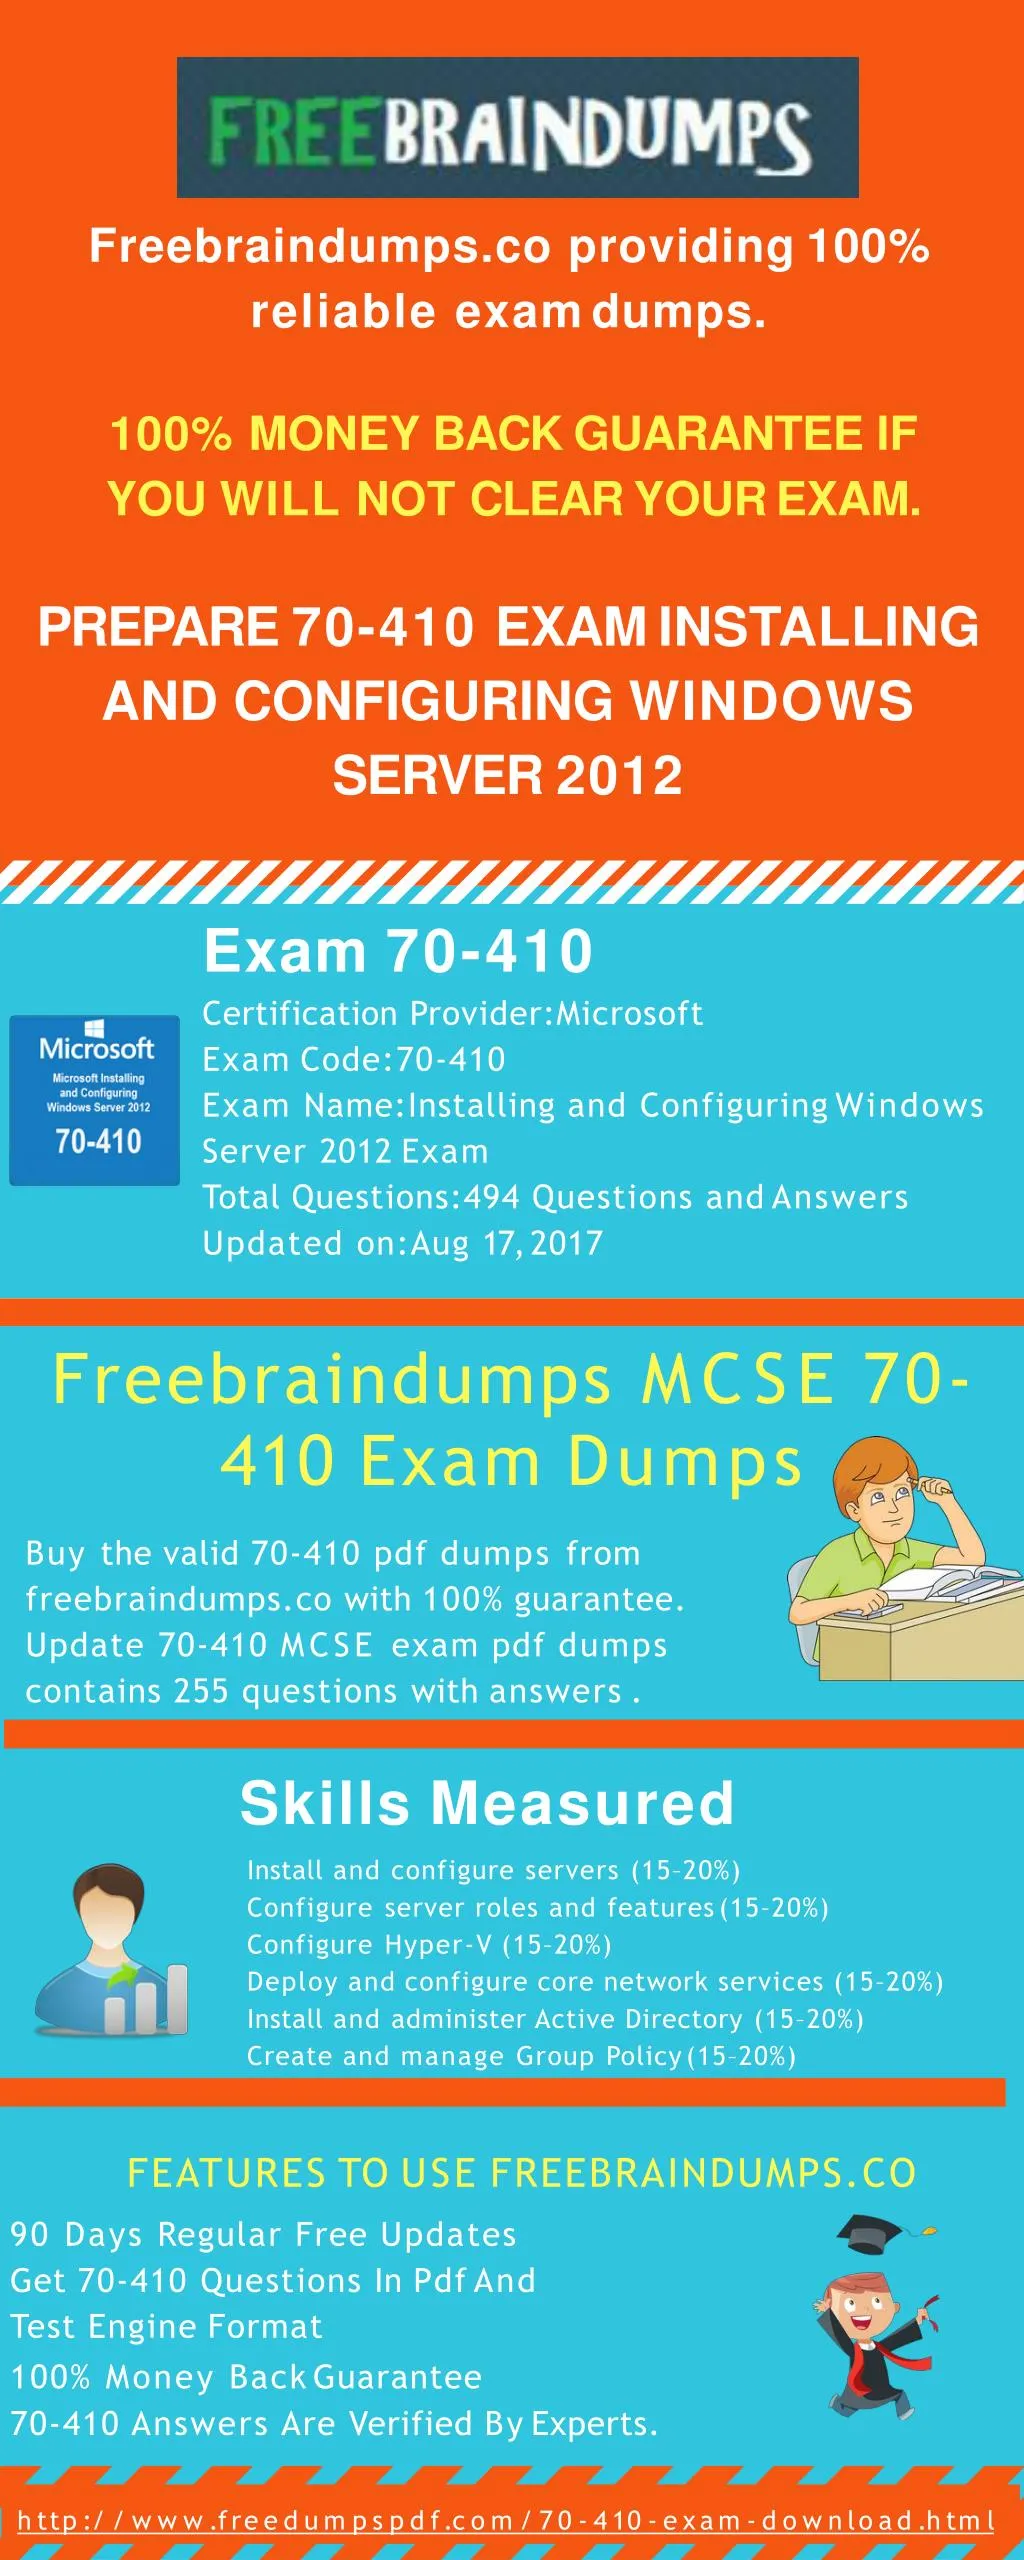 freebraindumps co providing 100 reliable exam